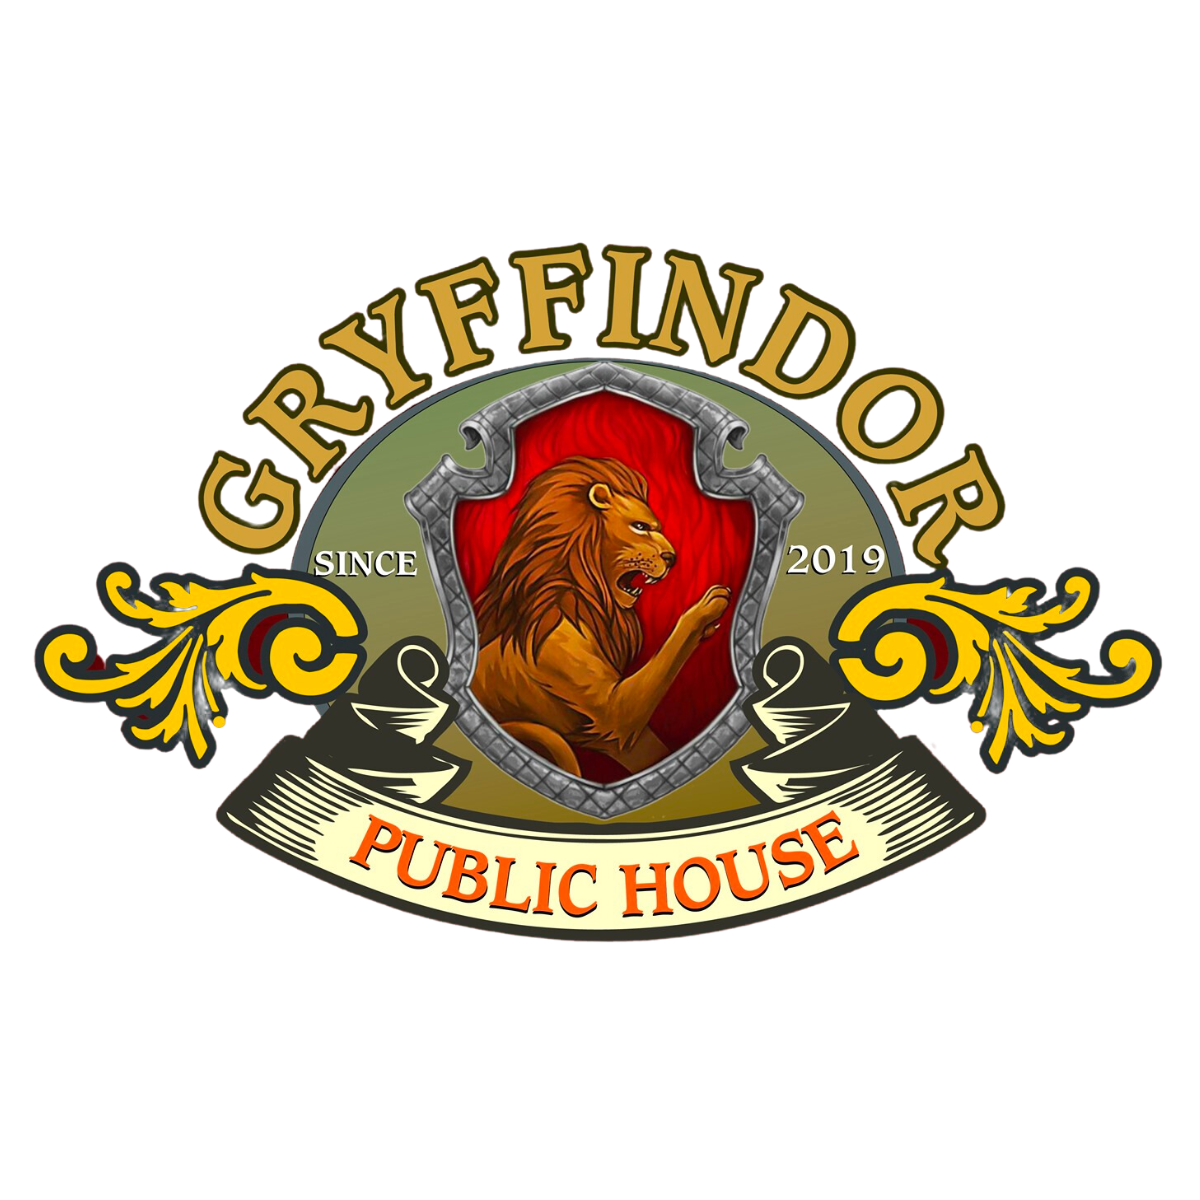 Gryffindor Public House